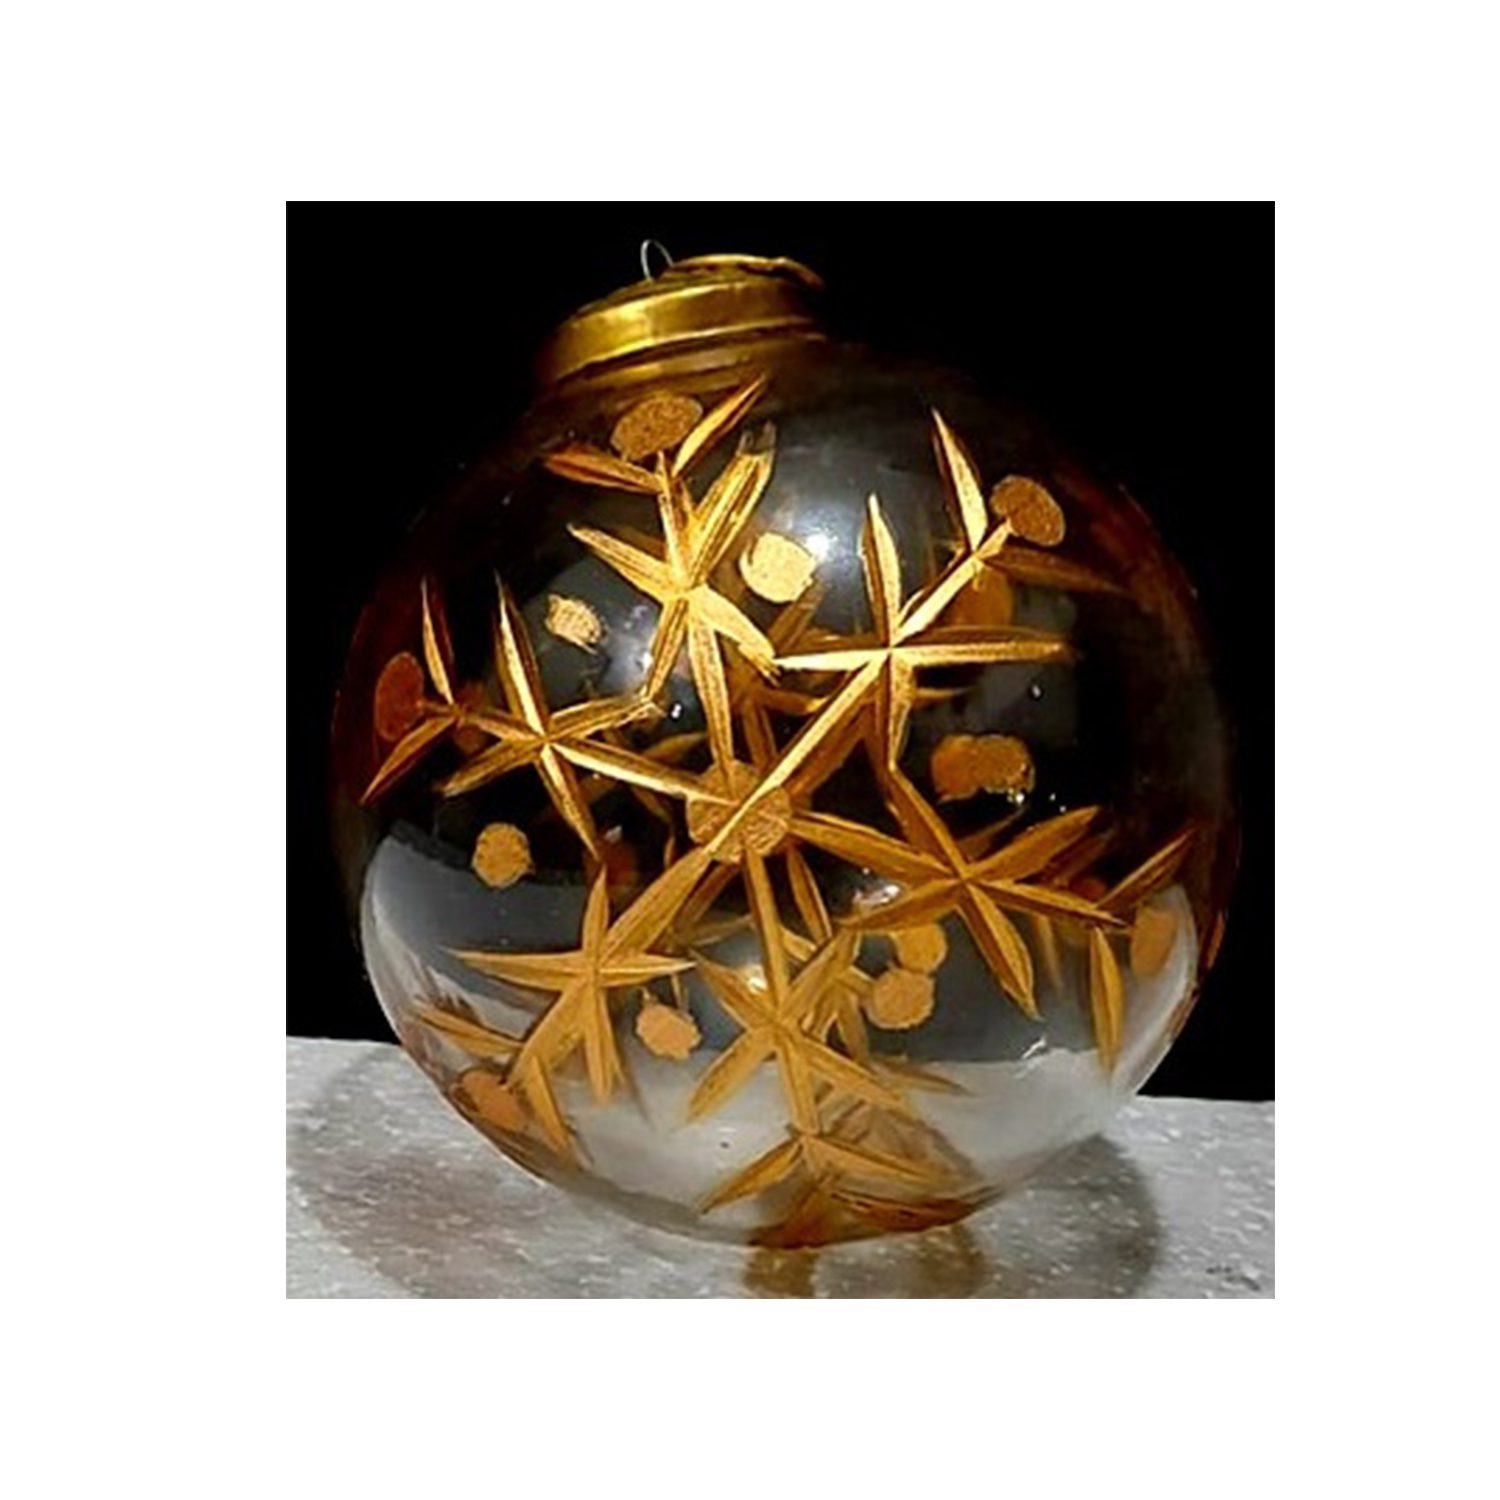 Jaewah Glass Ornament, Transparent with Gold